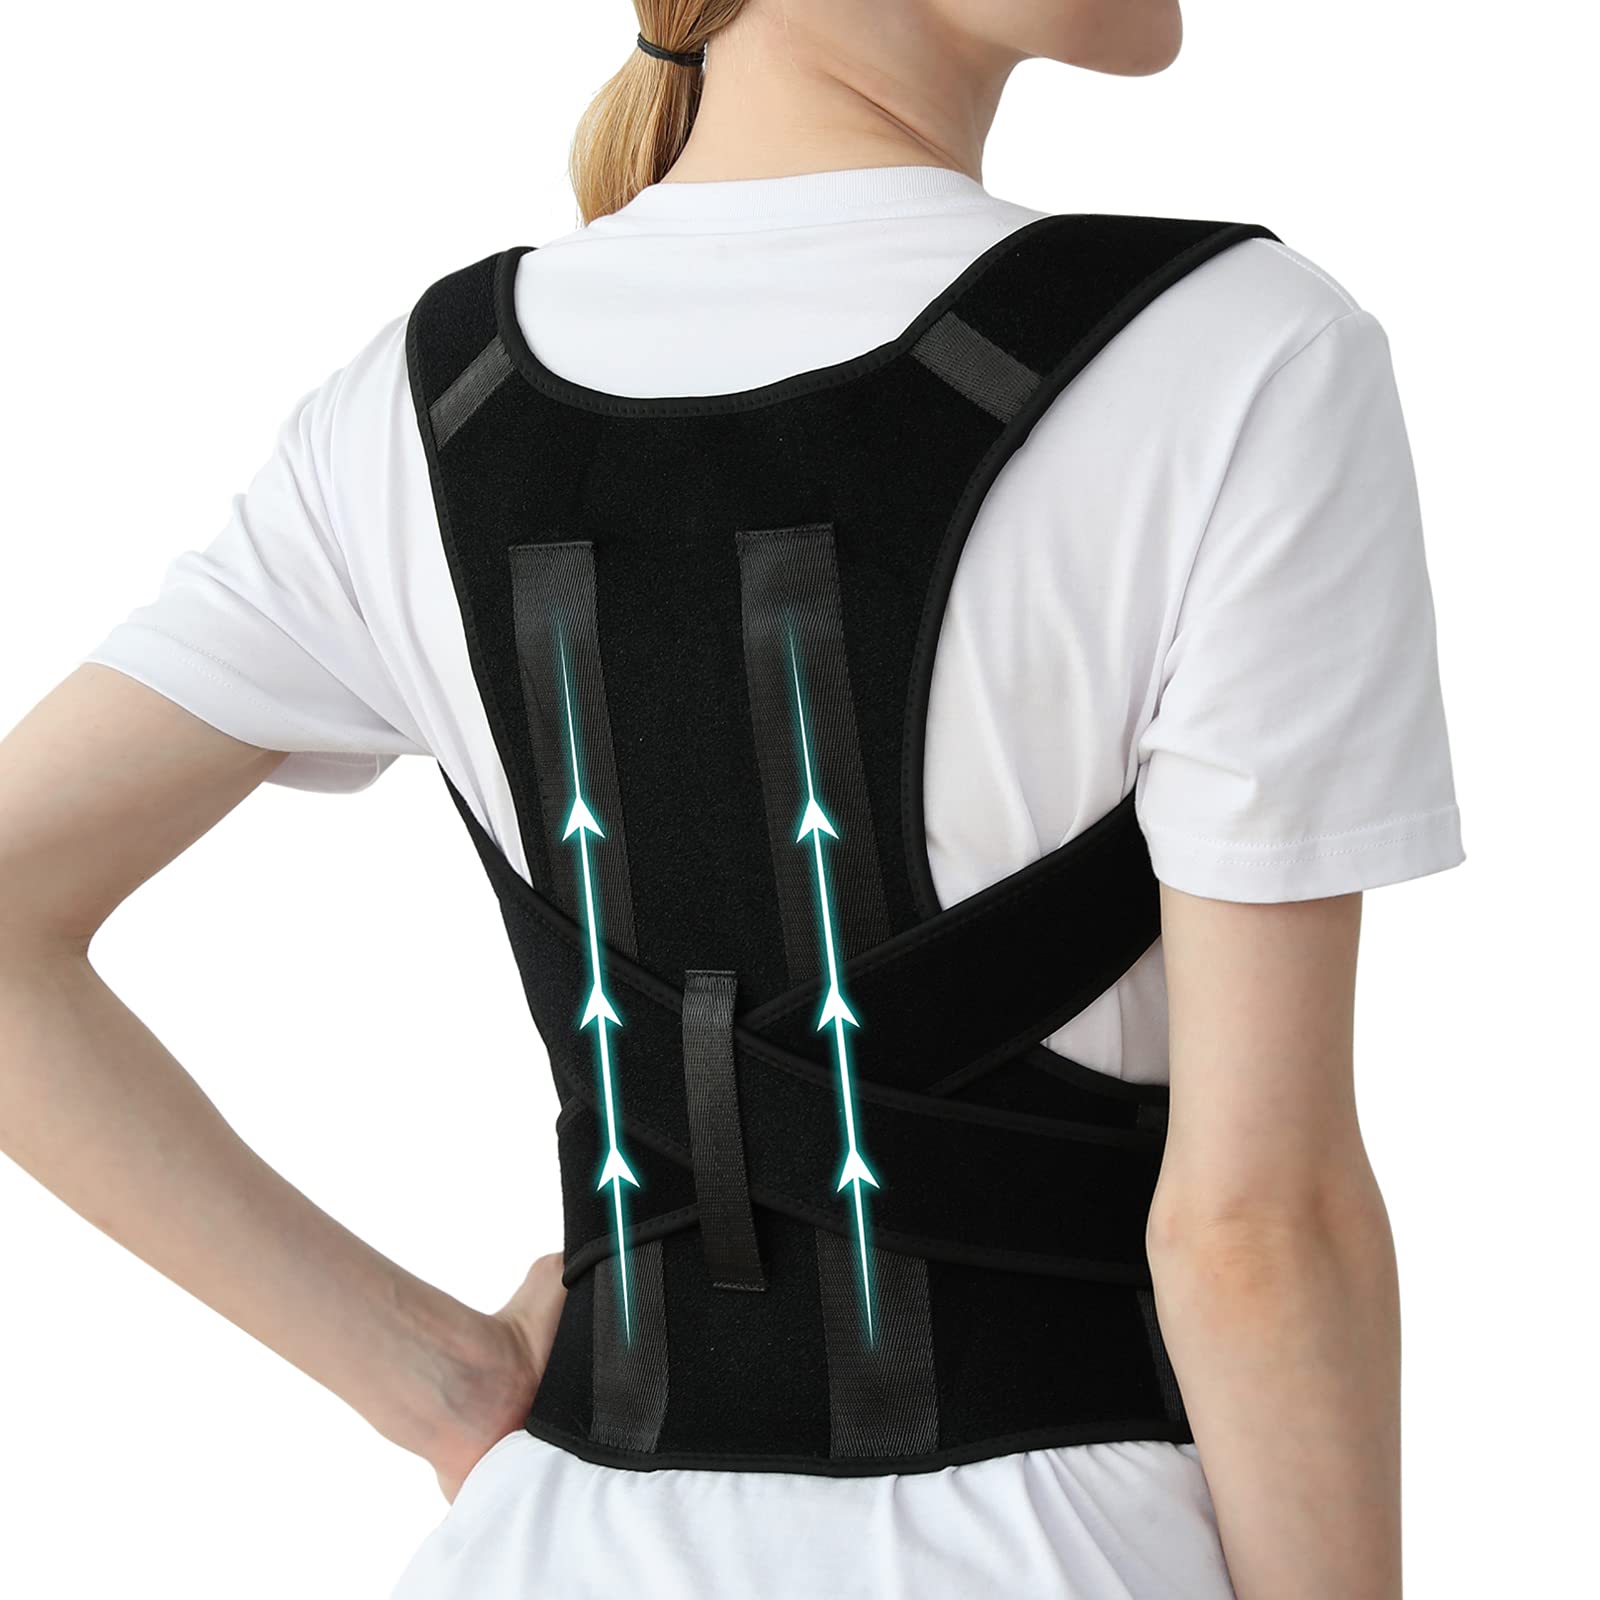 Posture Corrector with Back Support - Adjustable Upper Back Brace for Women  and Men - Straightener Posture for Neck, Back, Spine and Shoulder Pain  Relief(Large) 